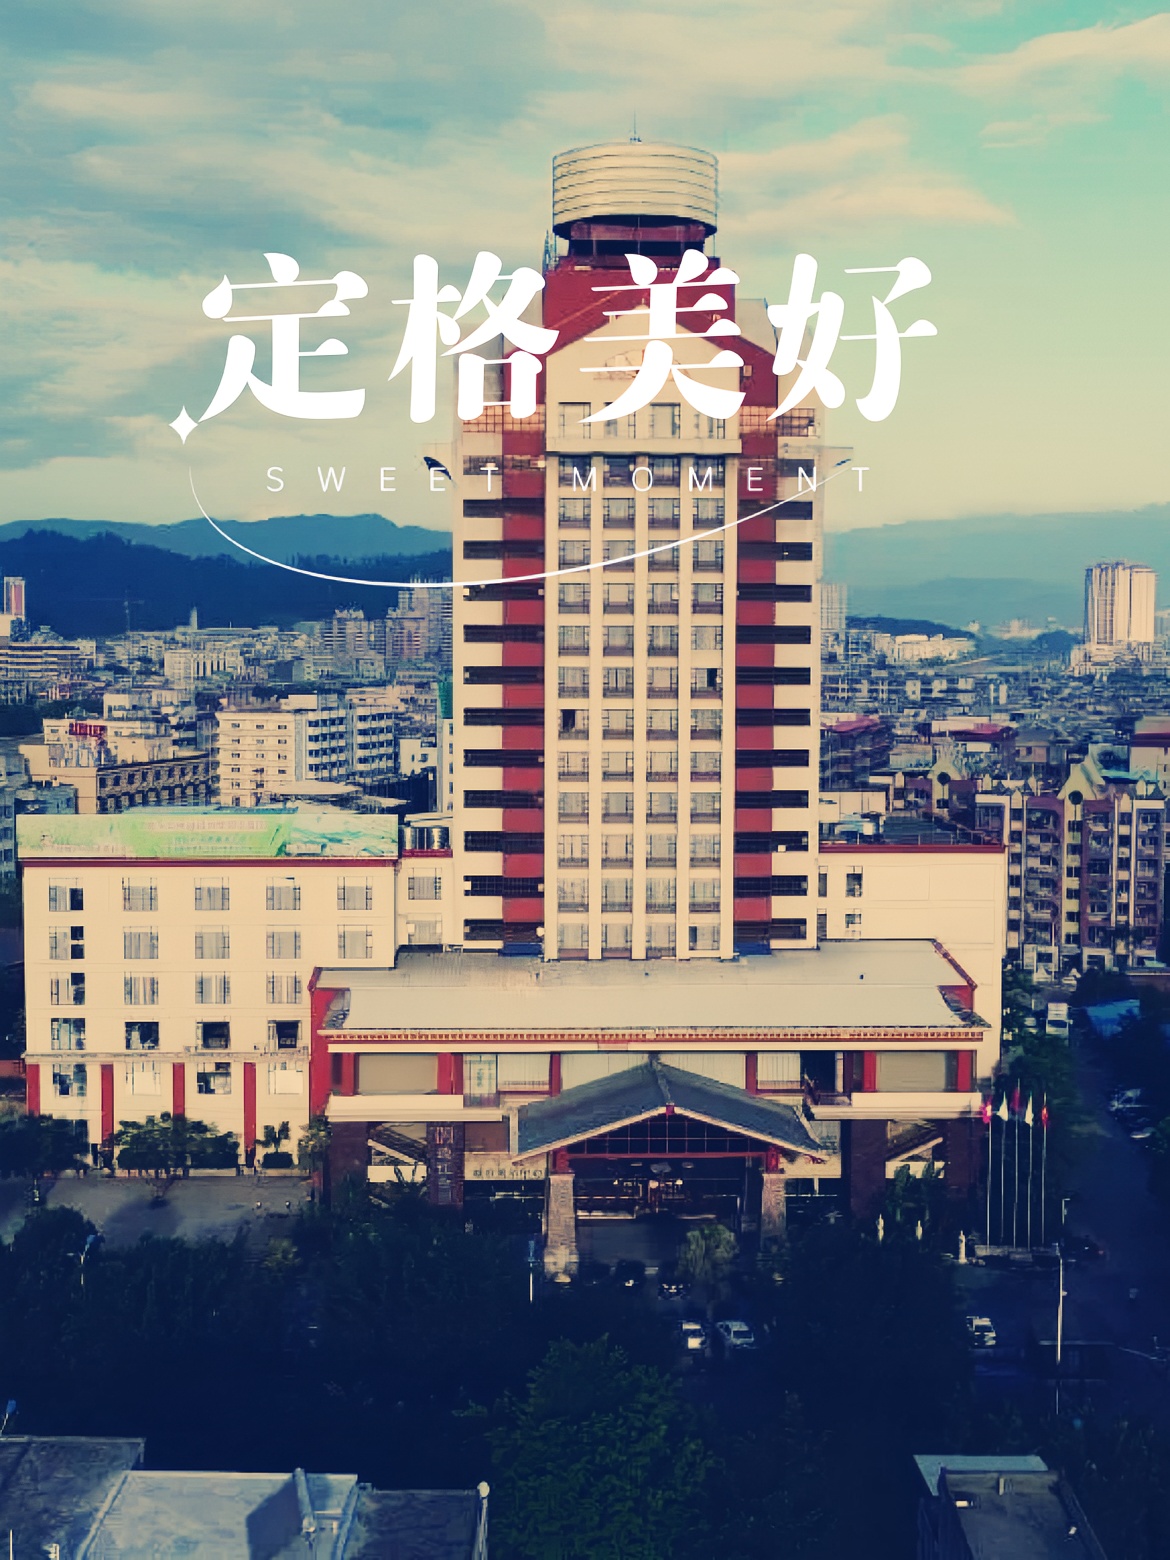 [Cute]丰顺金德宝酒店位于丰顺县城中心地段，是一家集住宿、餐饮、温泉水疗、会议、娱乐等功能为一体